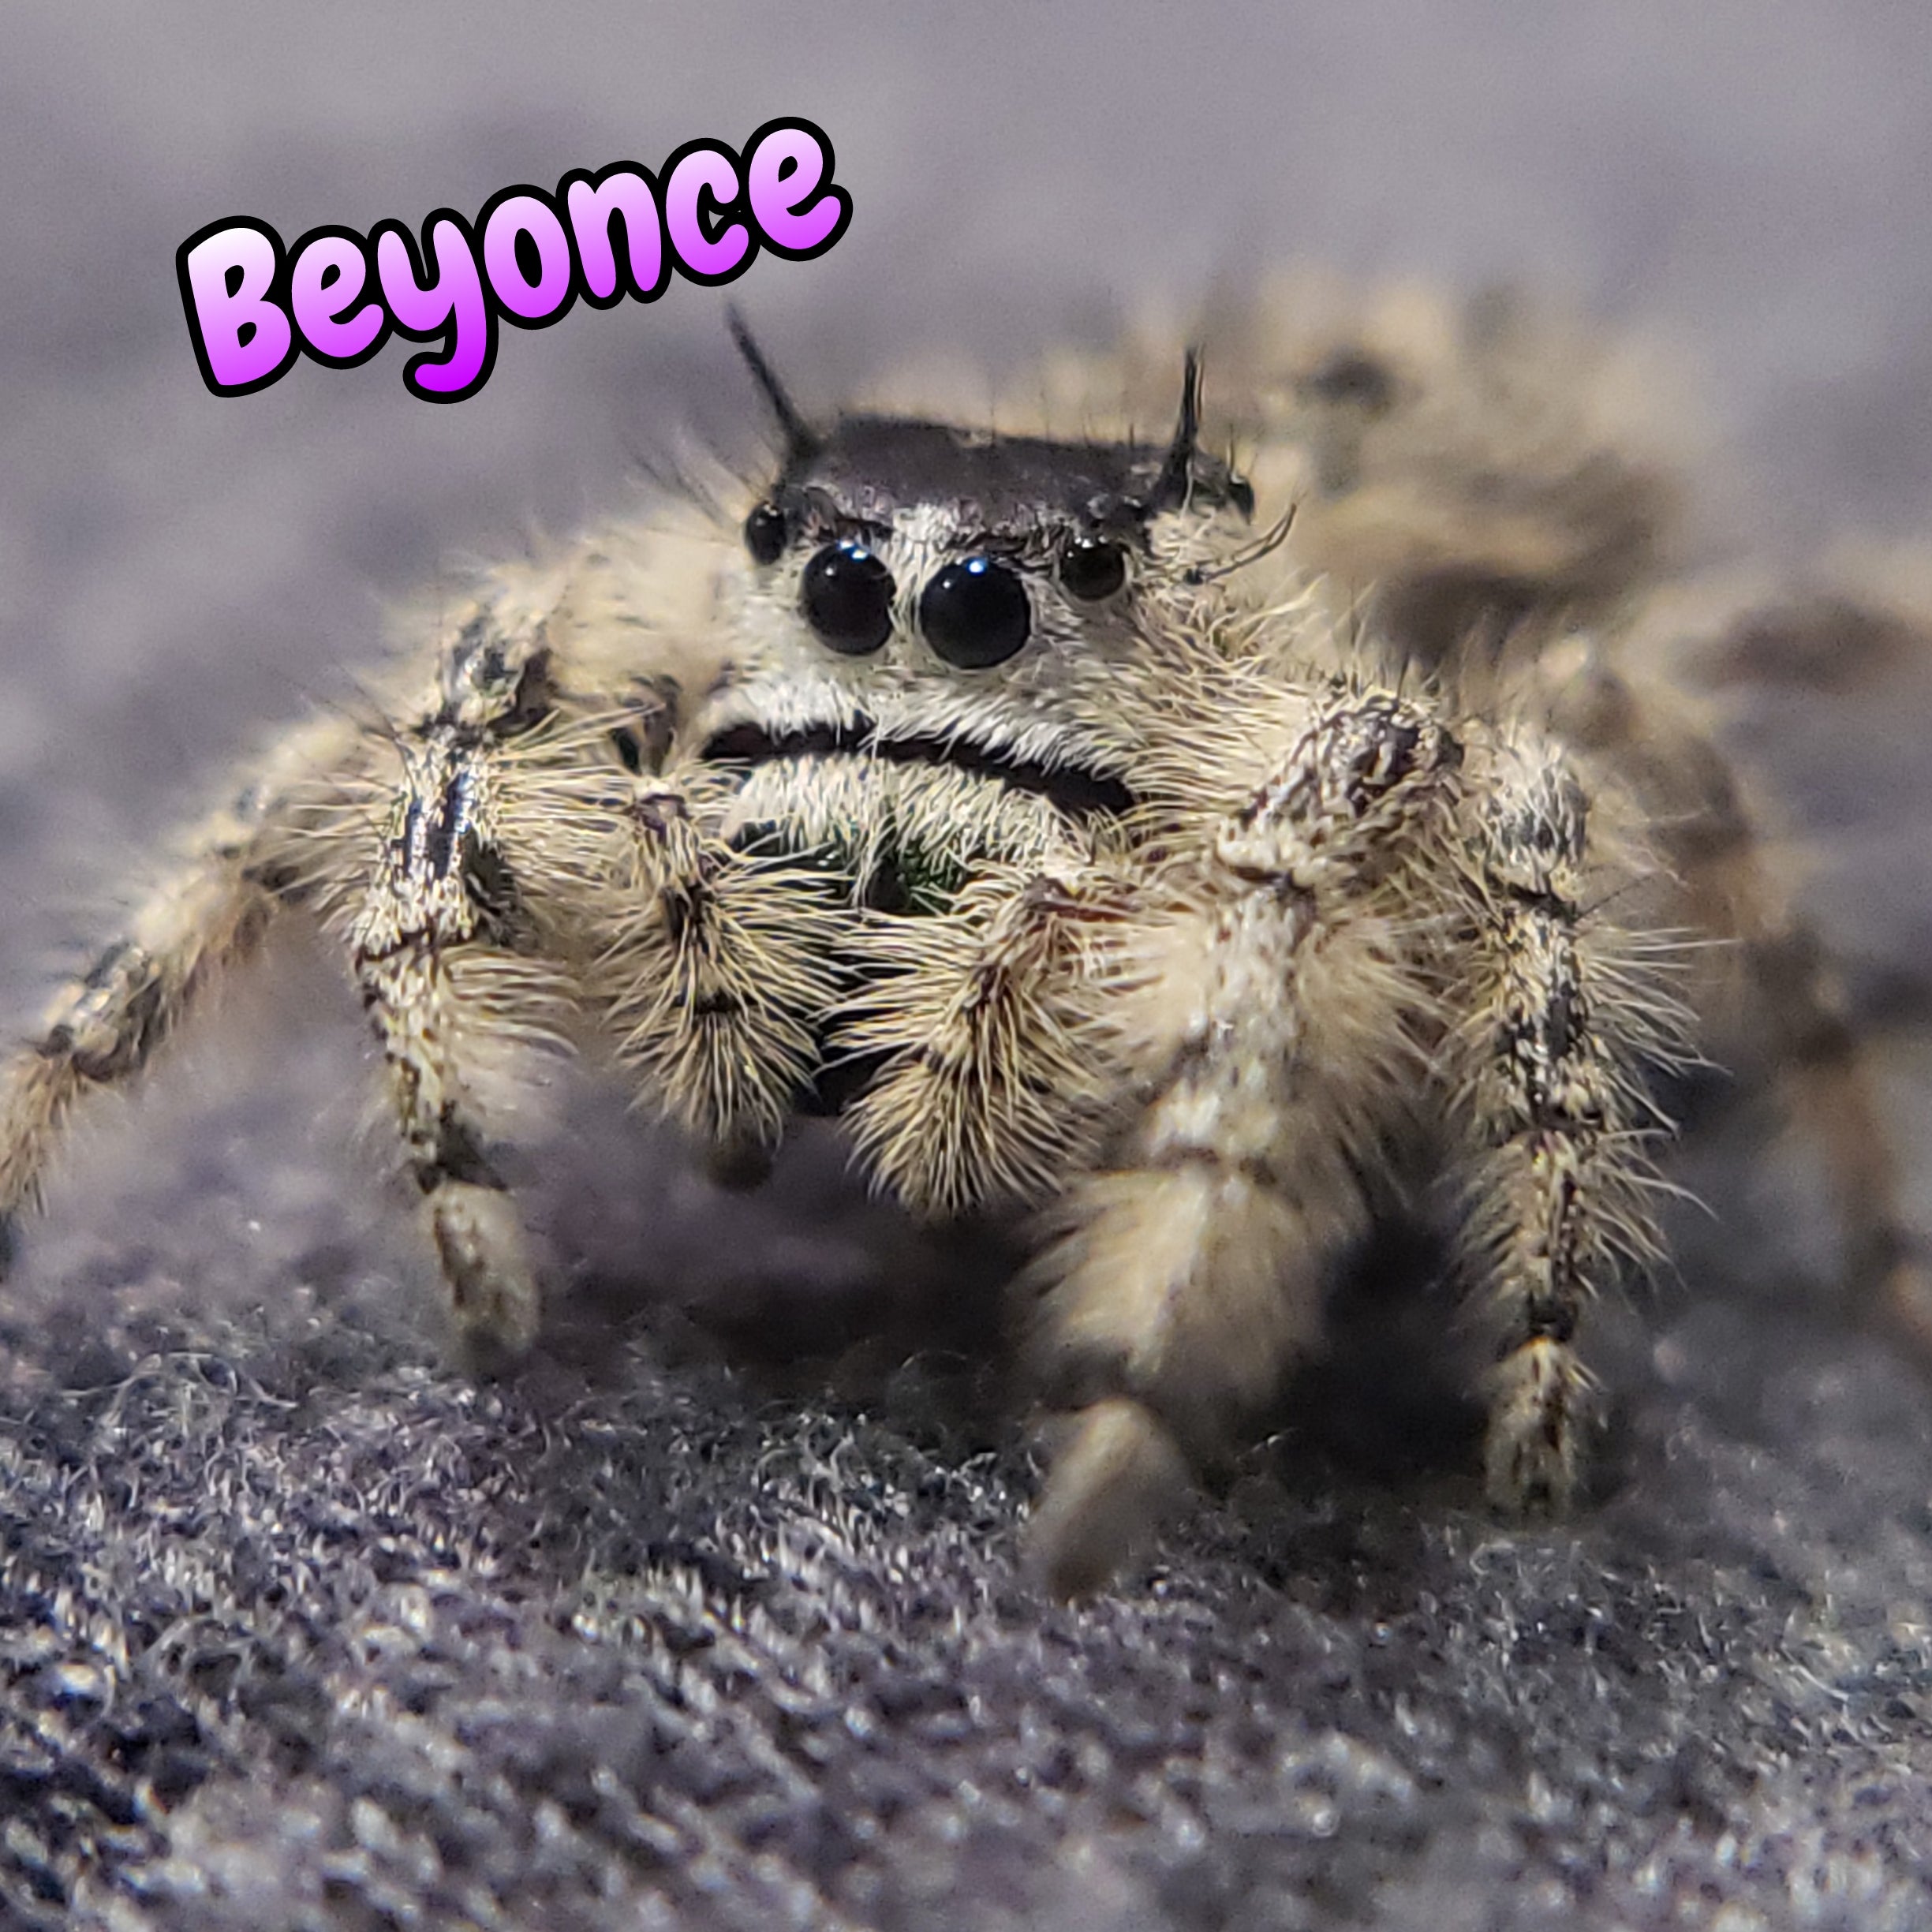 Otiosus Jumping Spider "Beyonce"